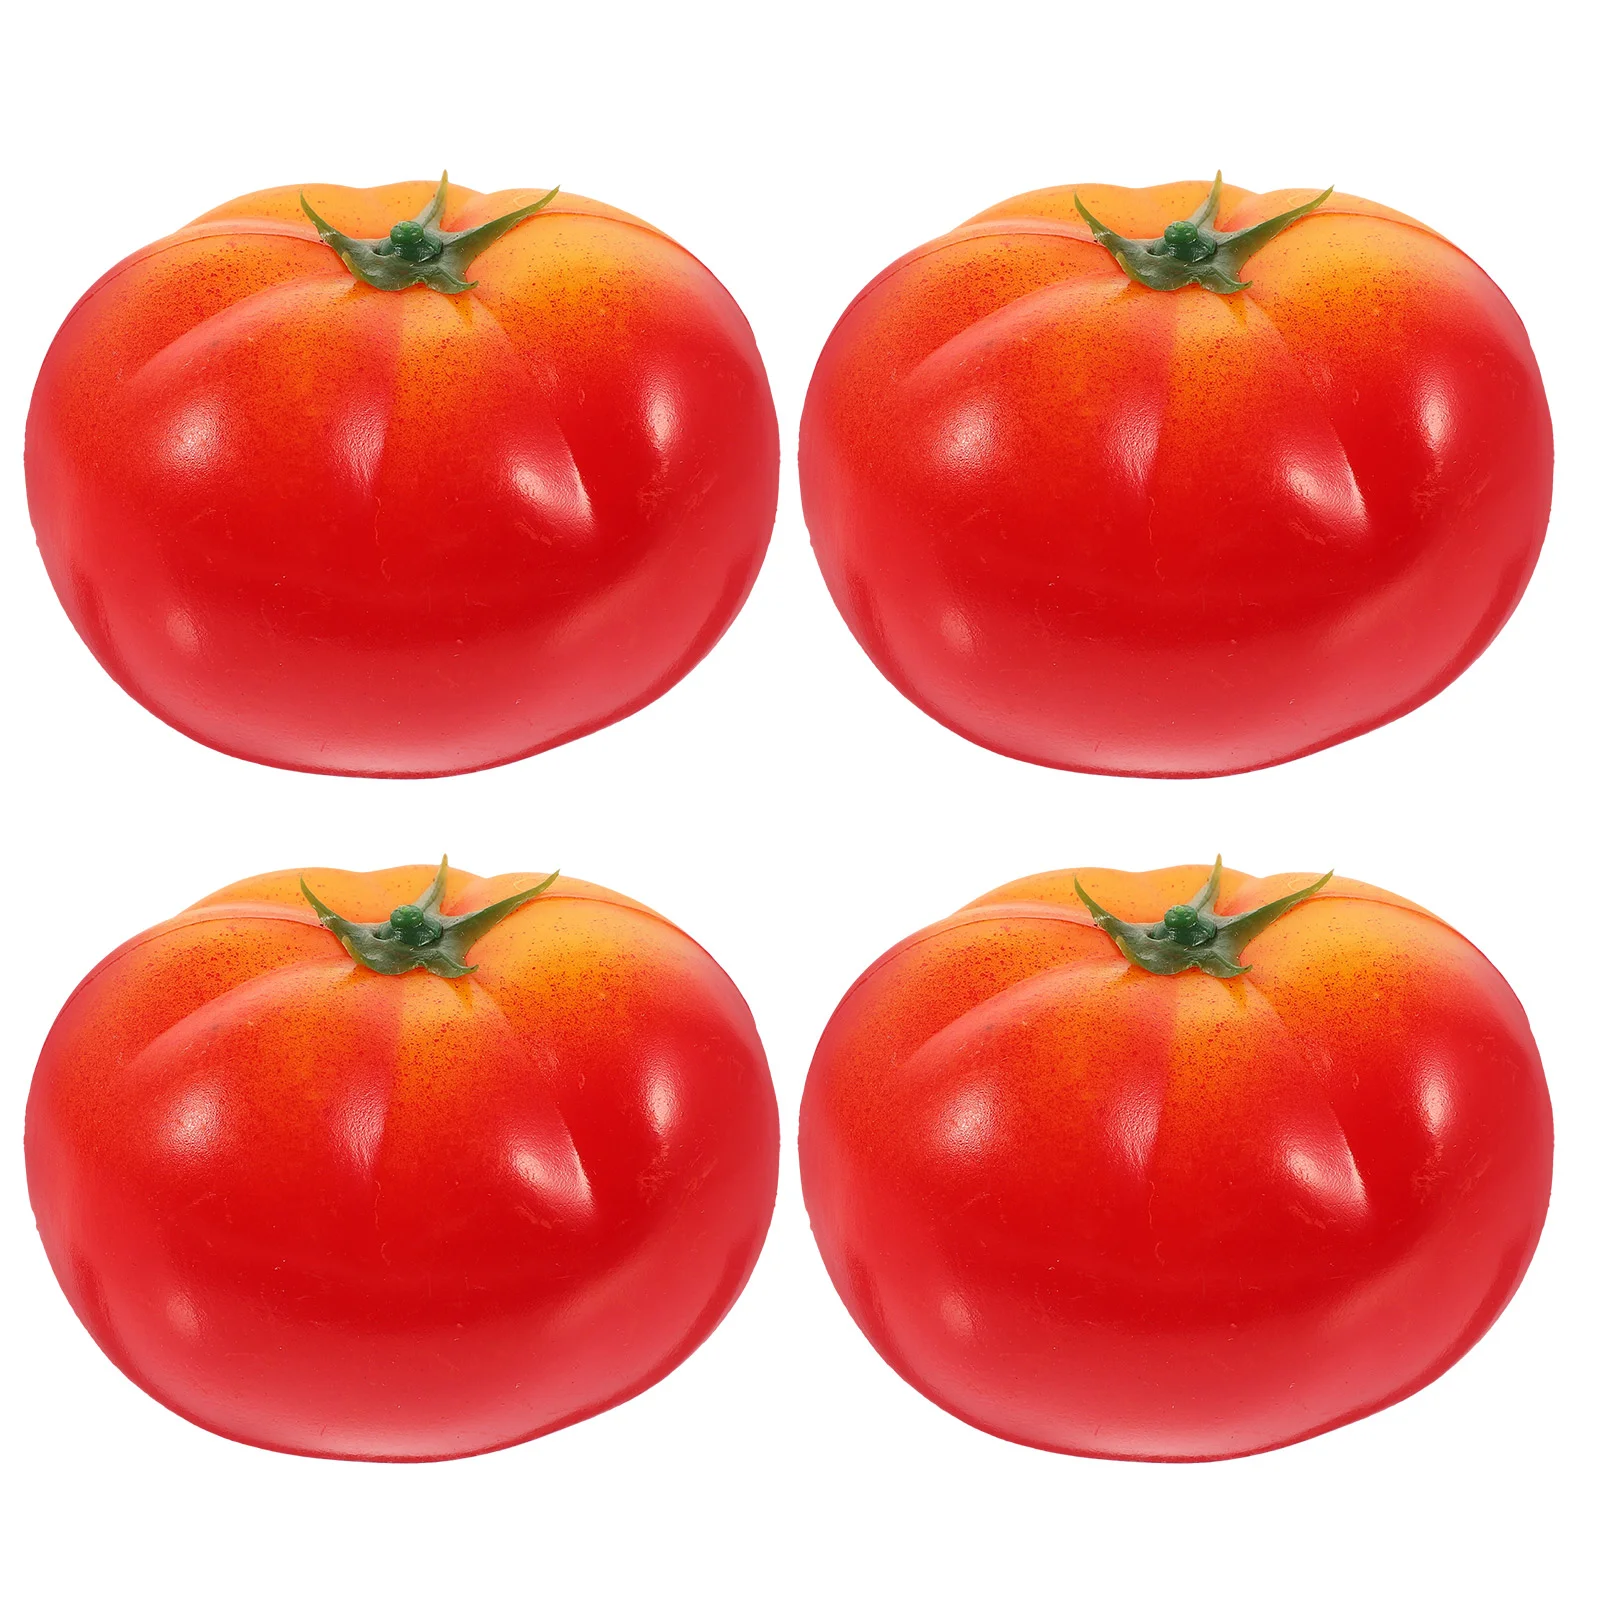 

4 Pcs Imitation Tomato Artificial Fruits Simulation Vegetable Props Foam Tomatoes Plastic Toddler Fake Models Simulated